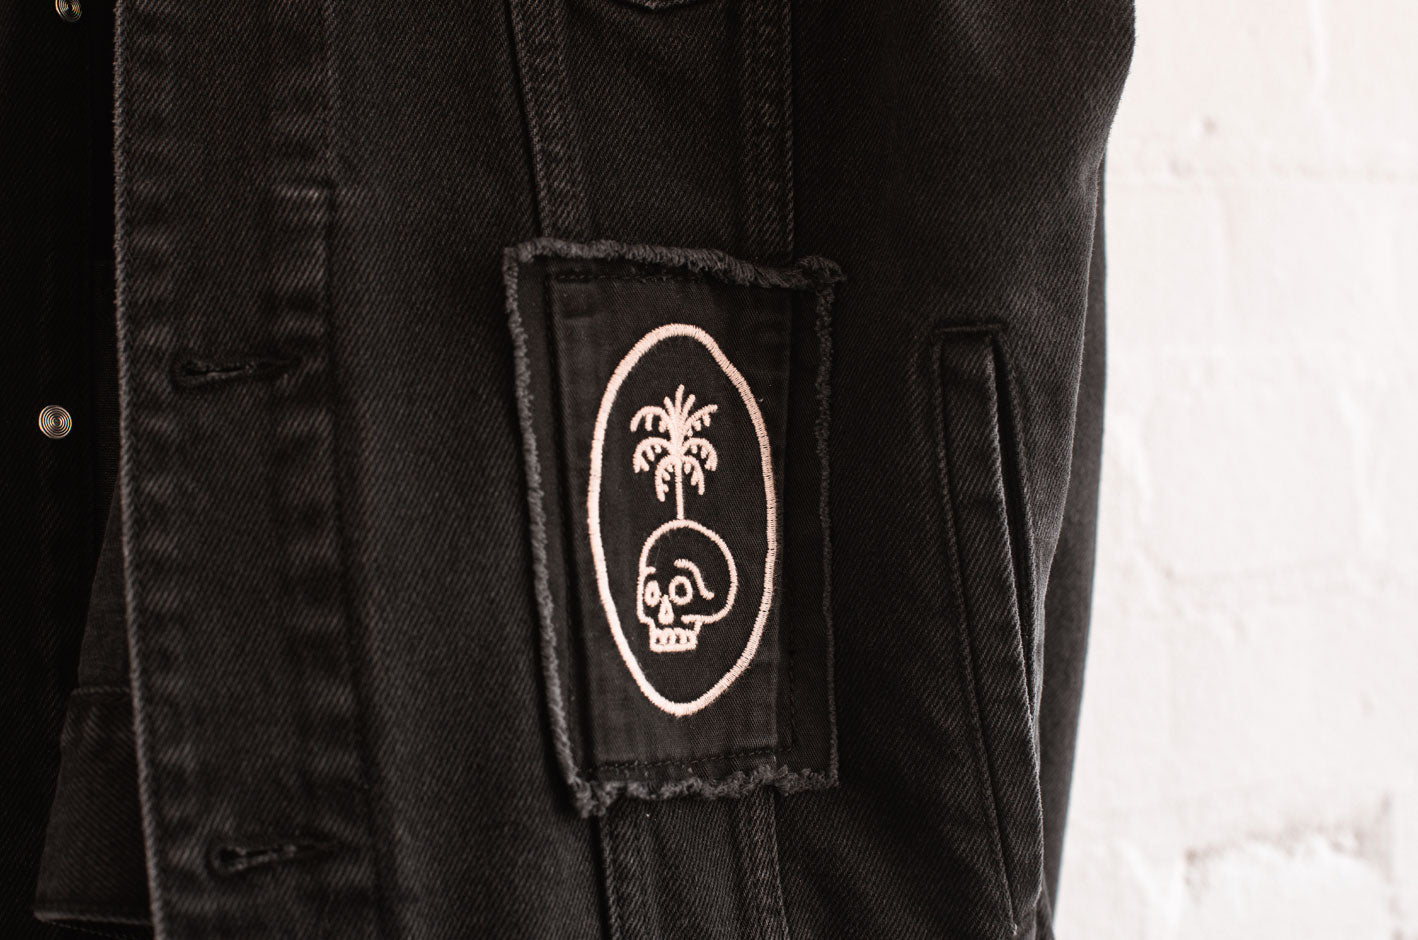 Provision & Co (P&Co) - Dark Daze Jacket Feature